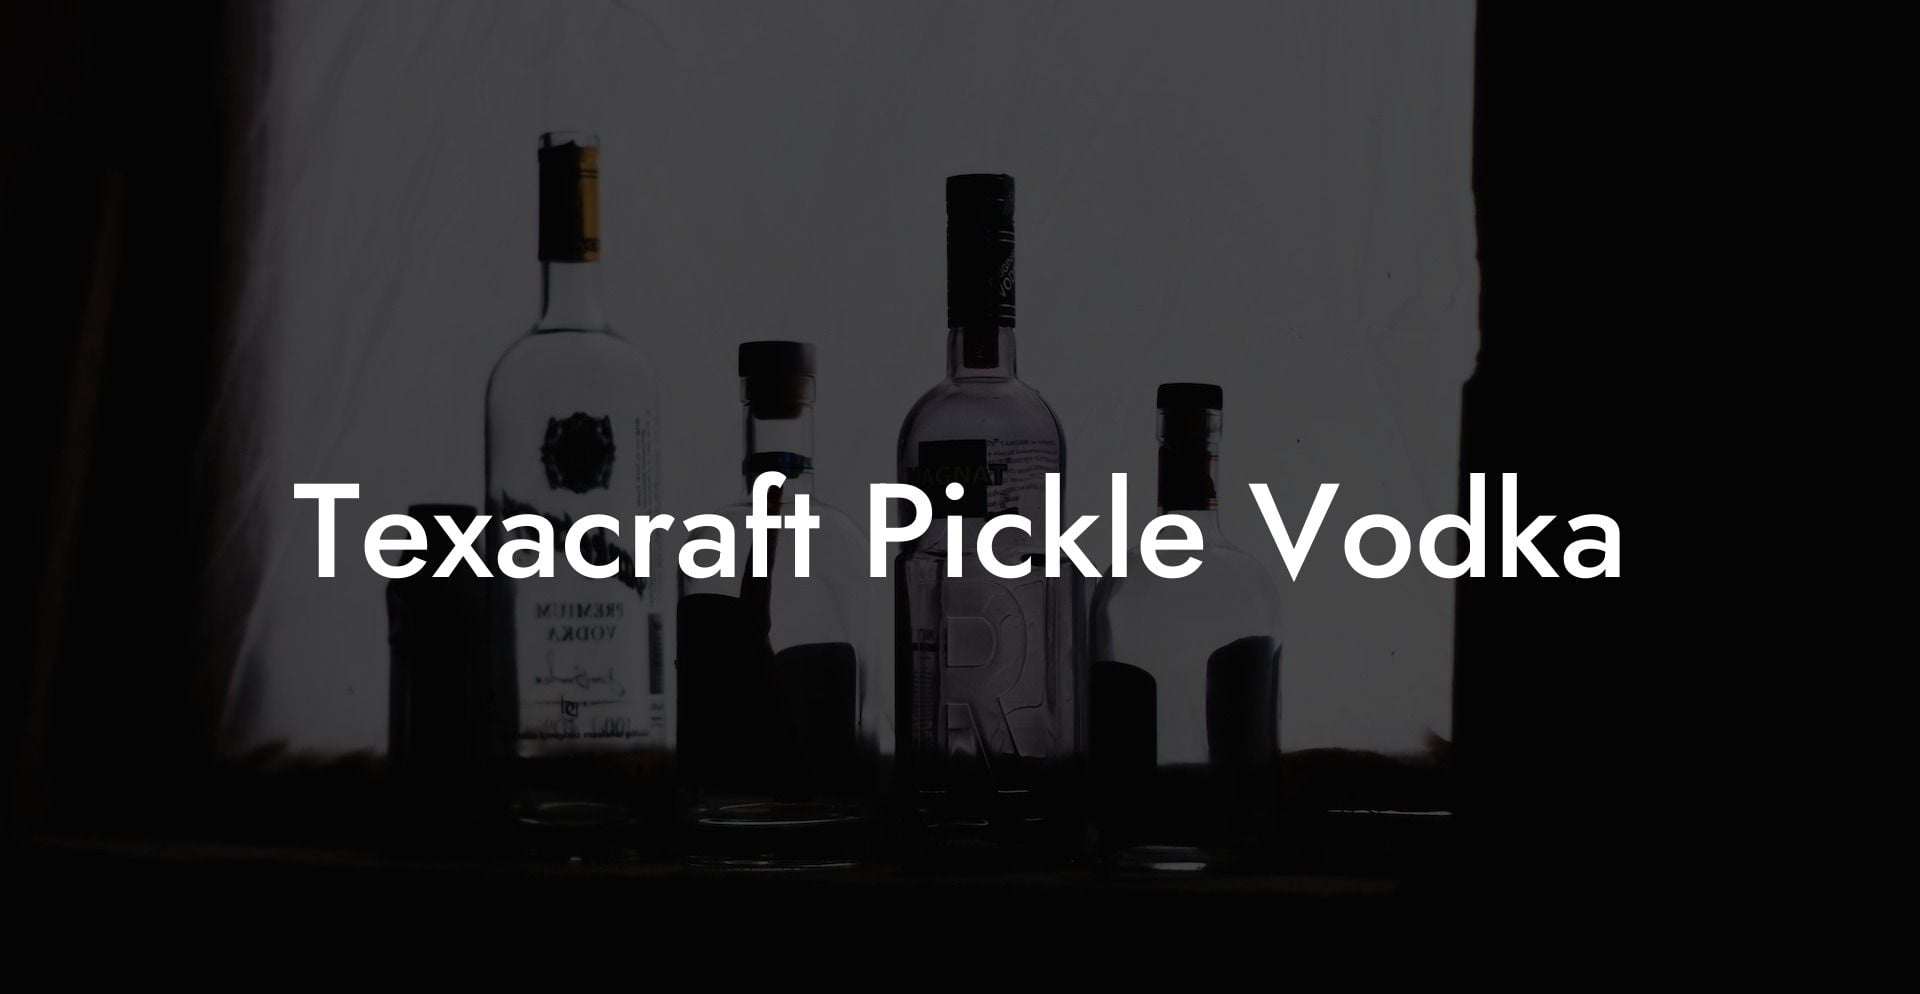 Texacraft Pickle Vodka